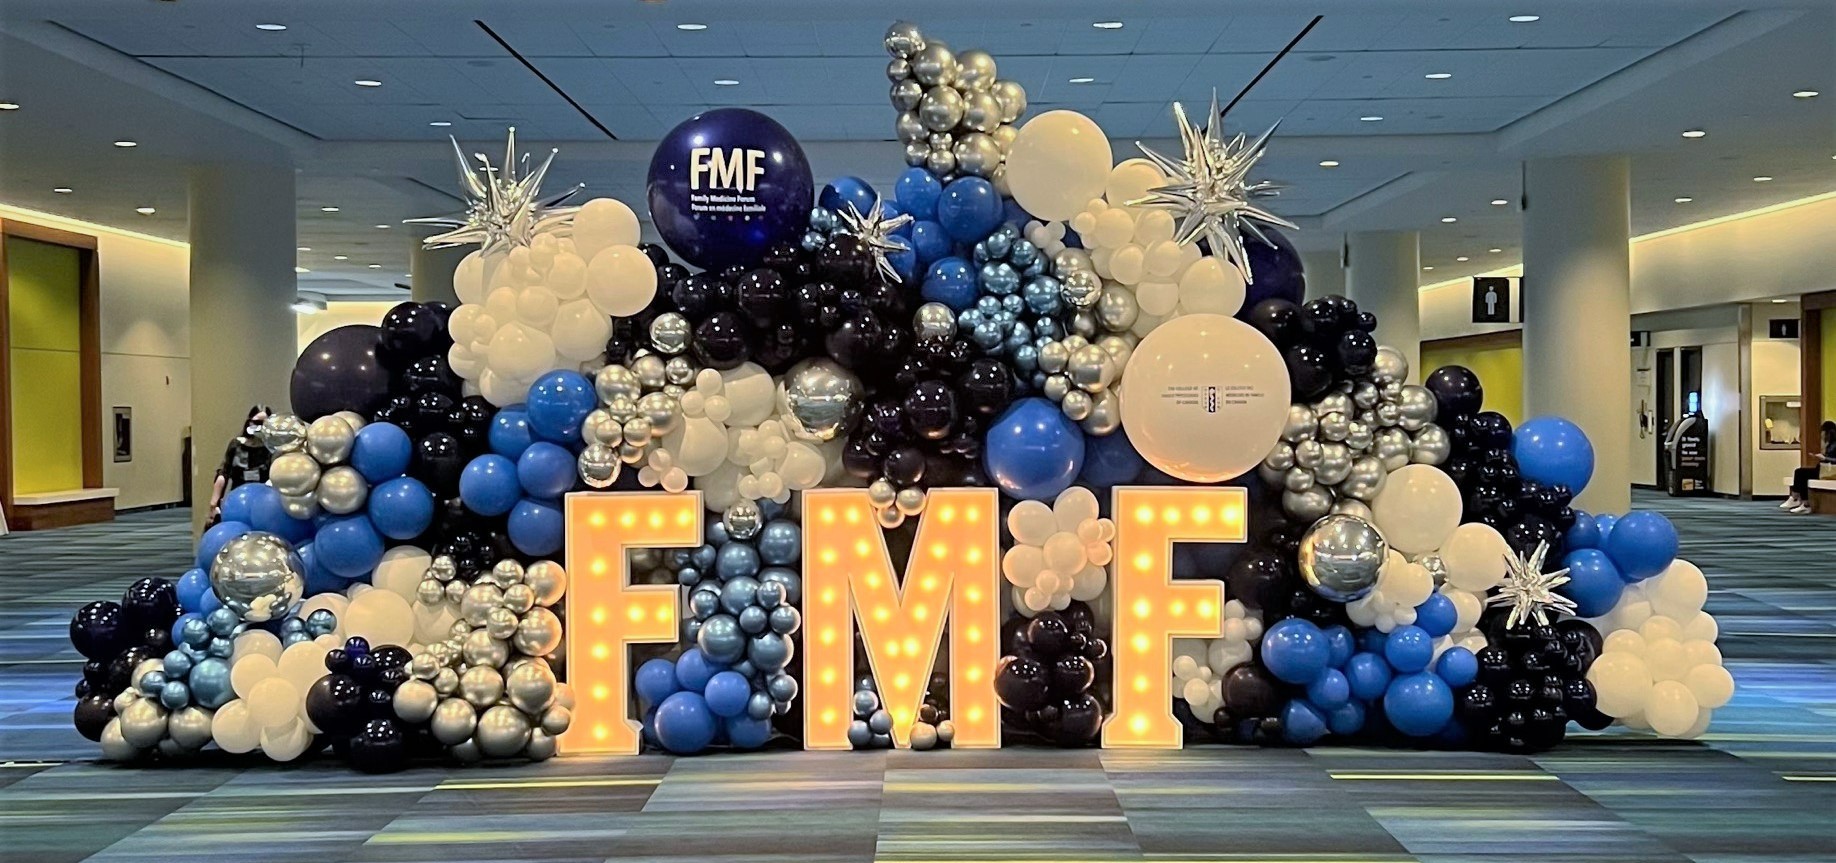 FMF event highlight